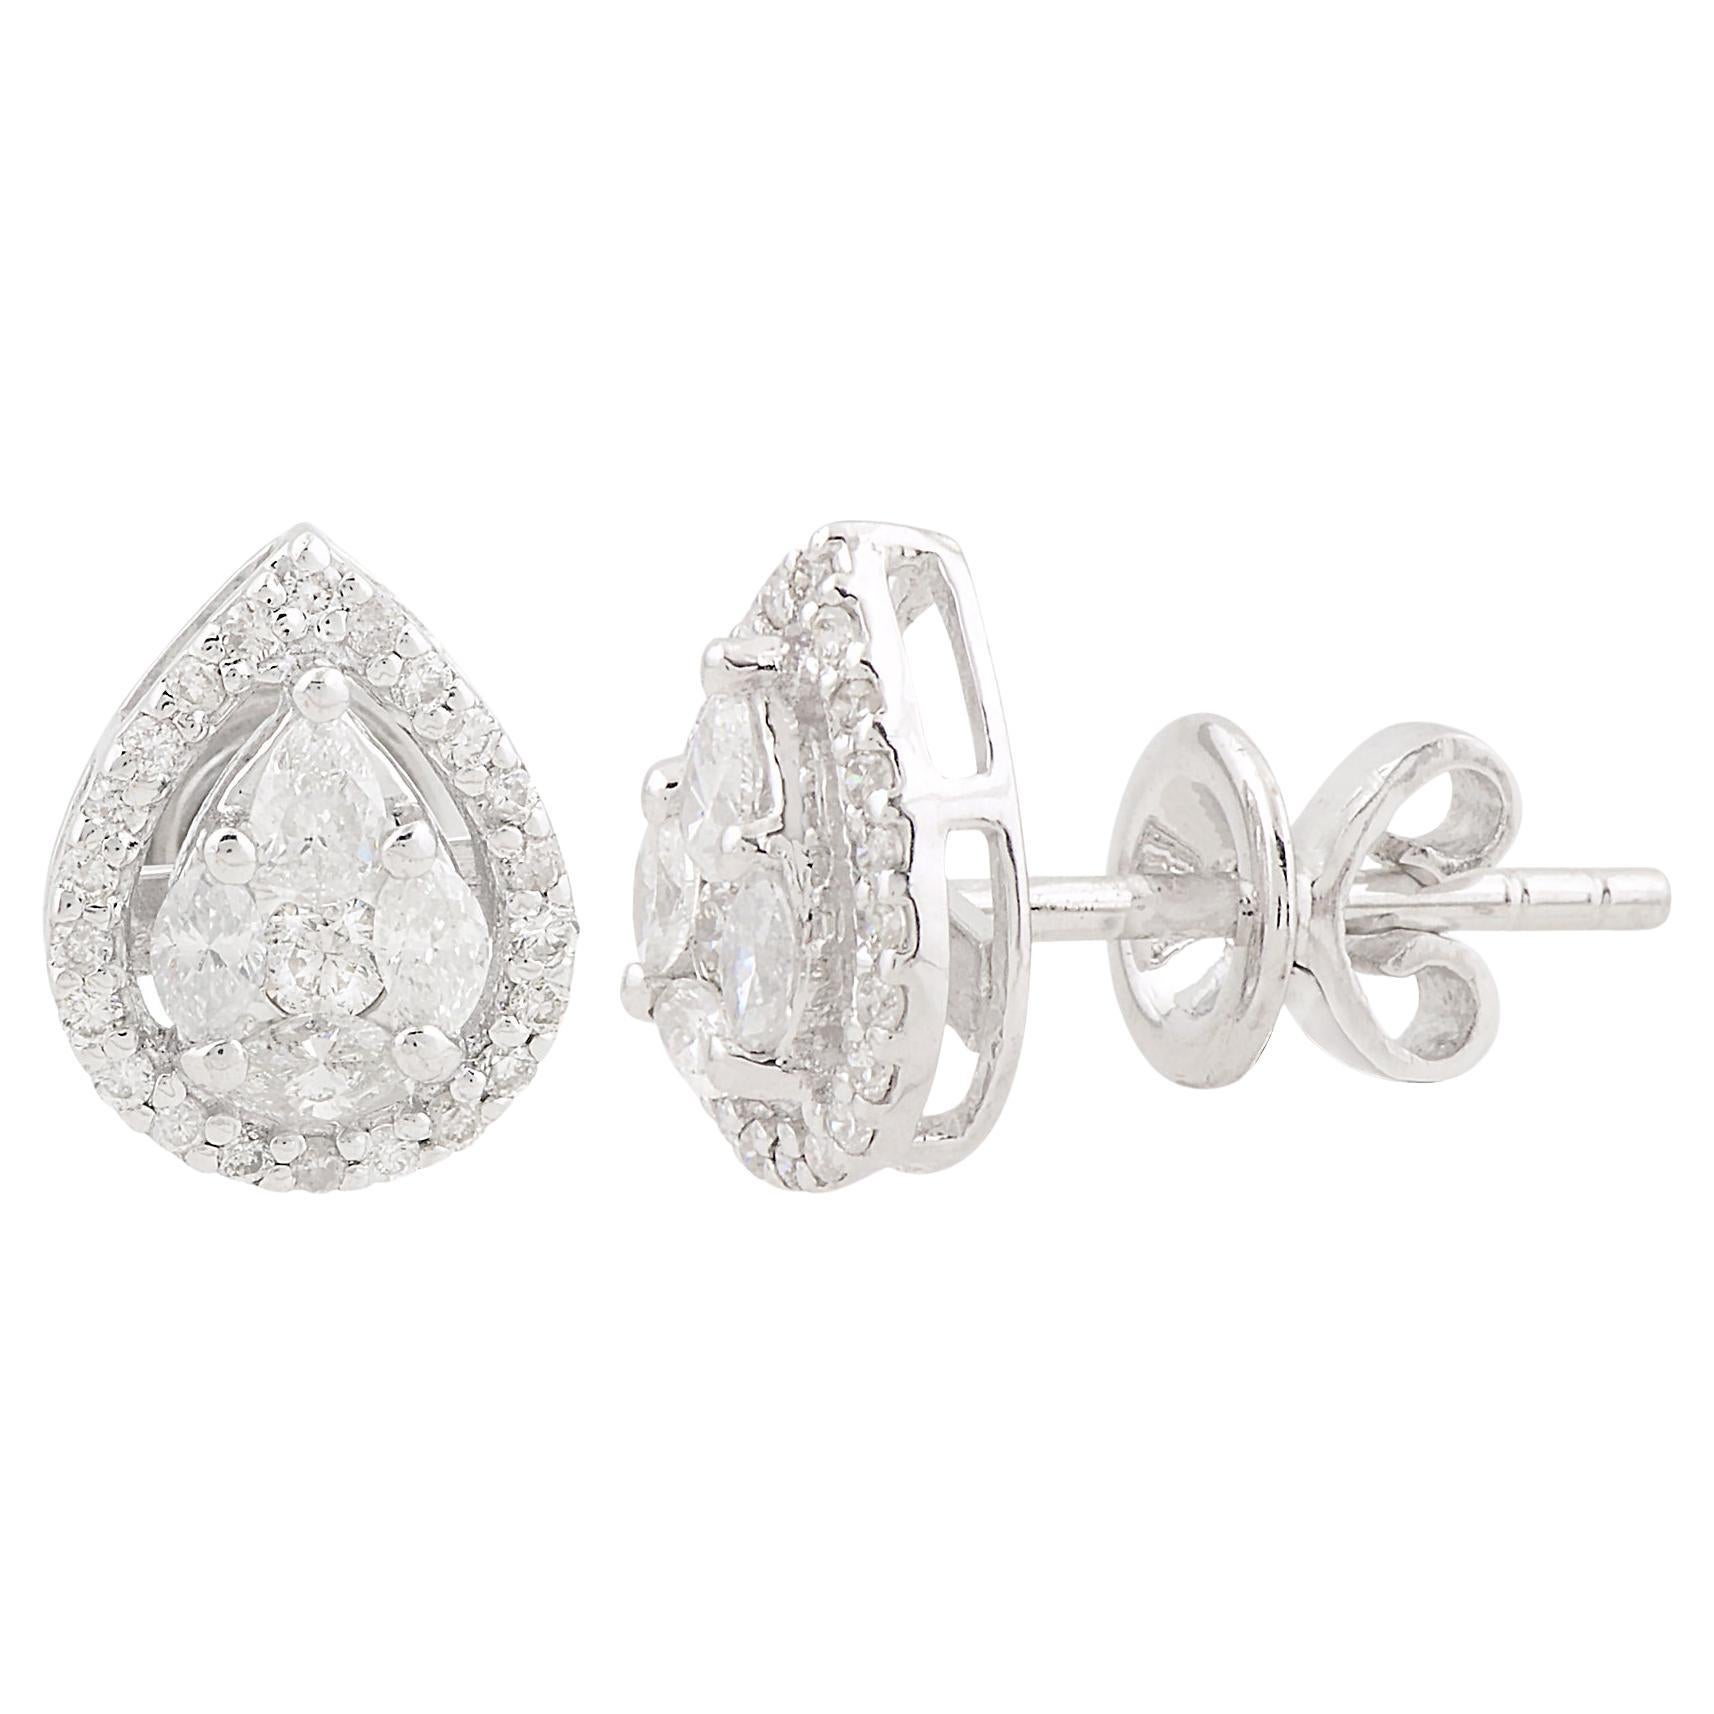 SI Clarity HI Color Pear Marquise Diamond Pear Stud Fine Earrings 10 Karat Gold